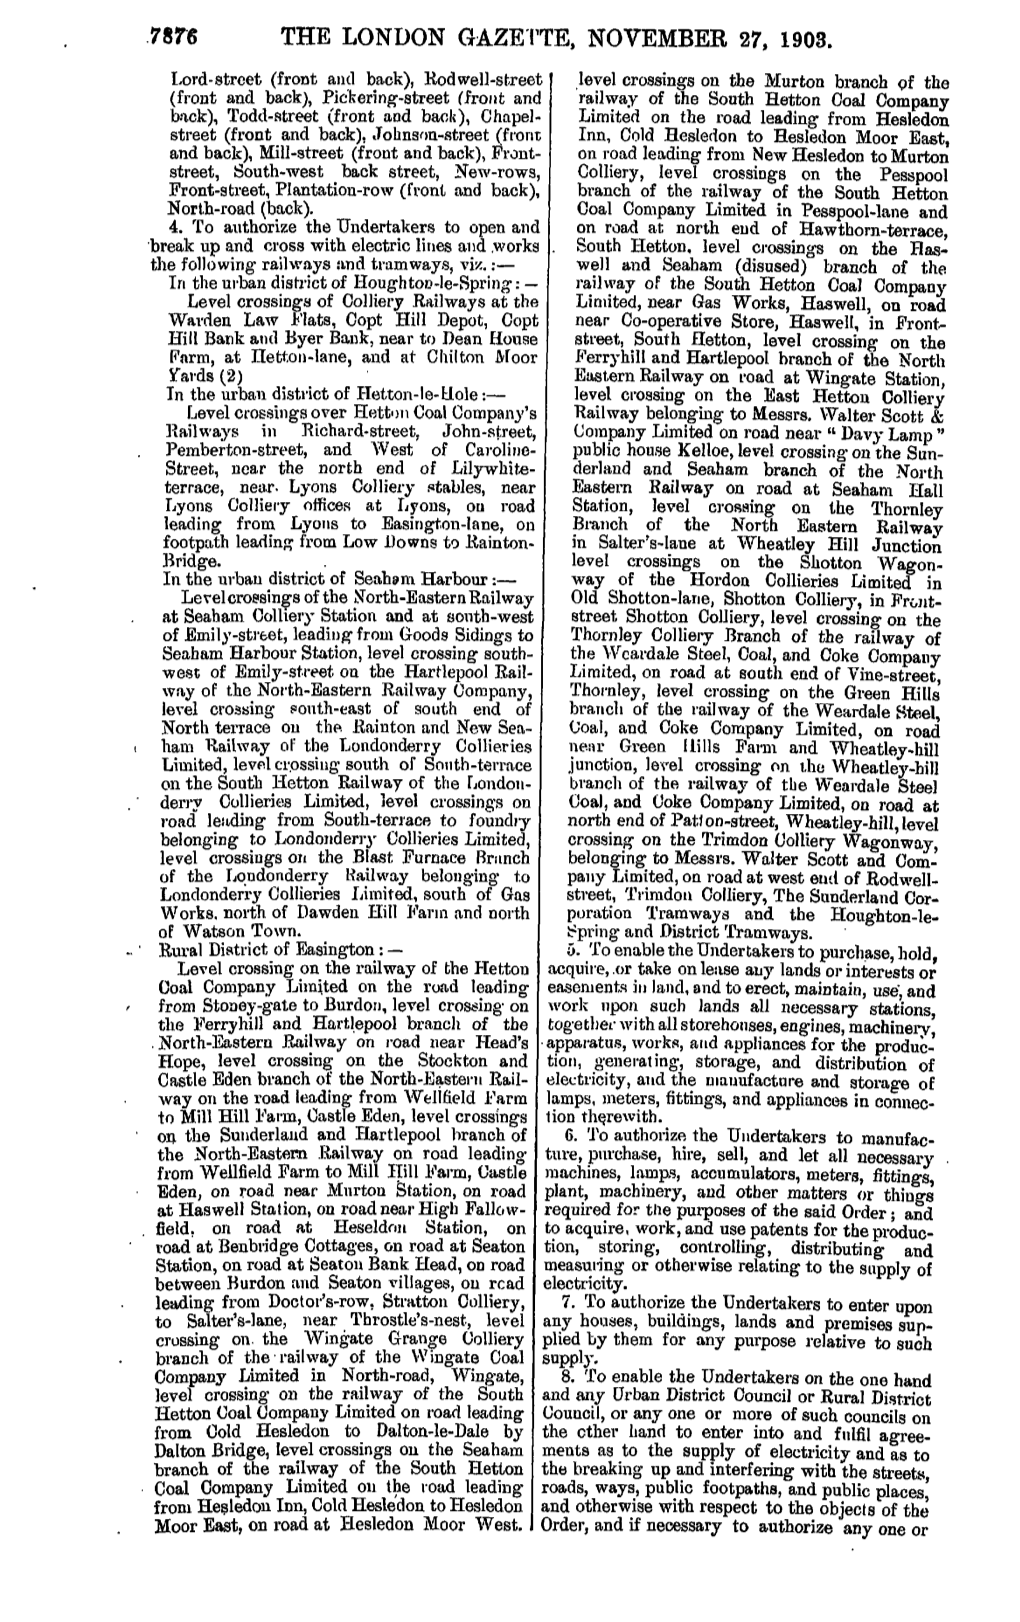 7876 the London Gazette, November 27, 1903